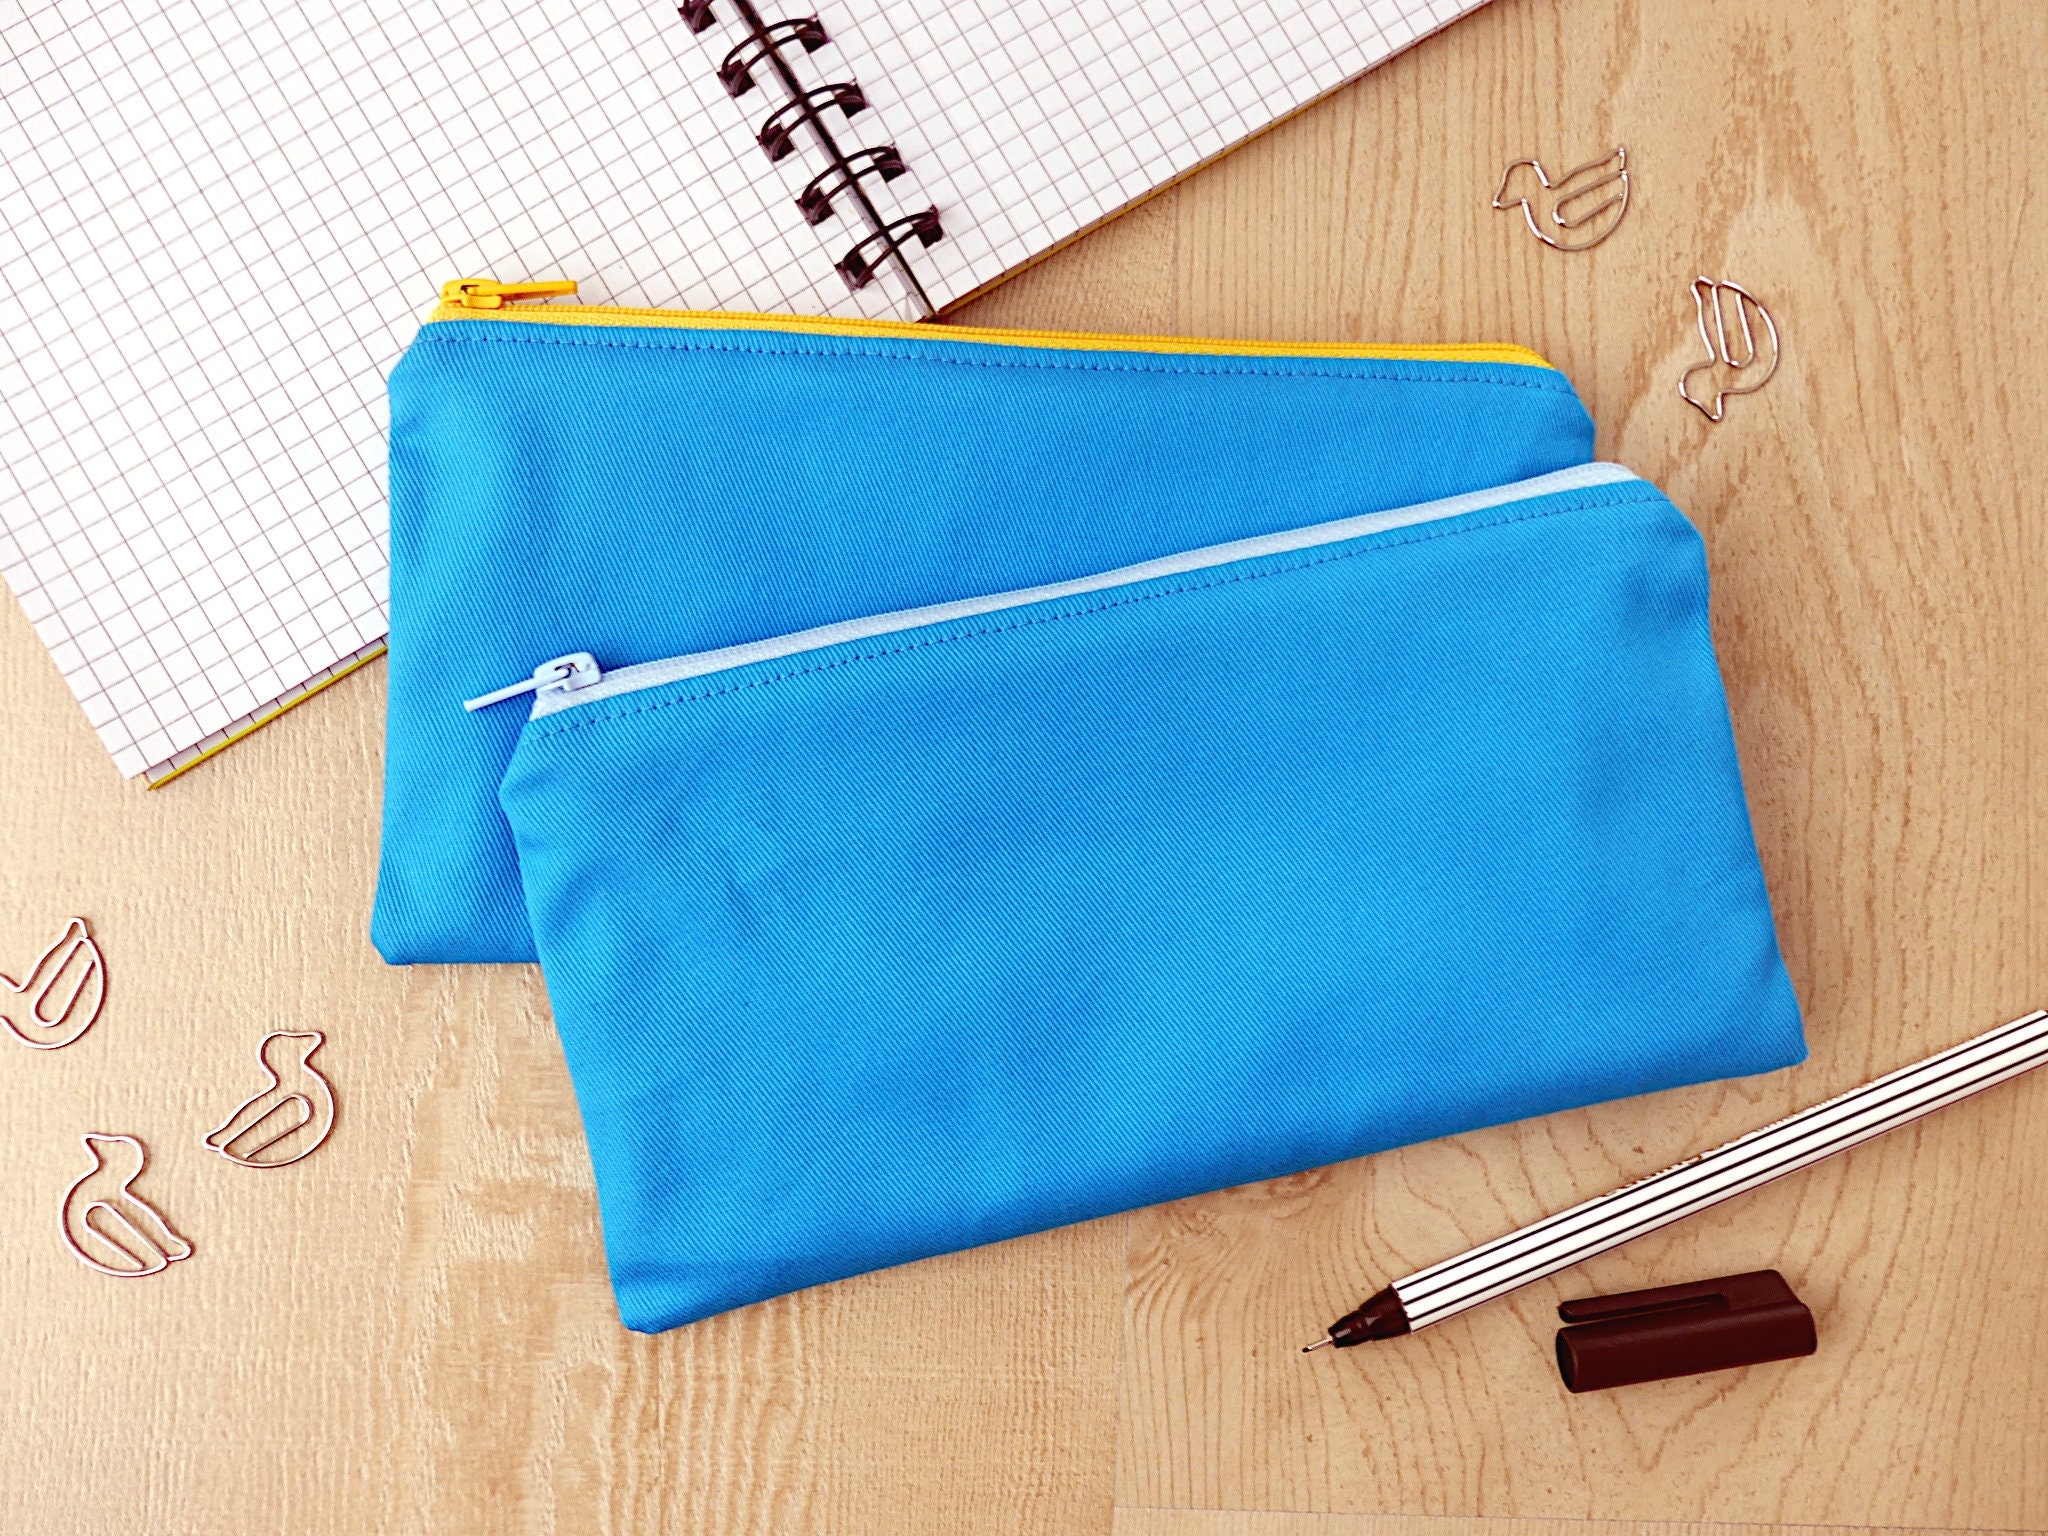 Turquoise pencil case fabric pencil case Small pencil case | Etsy